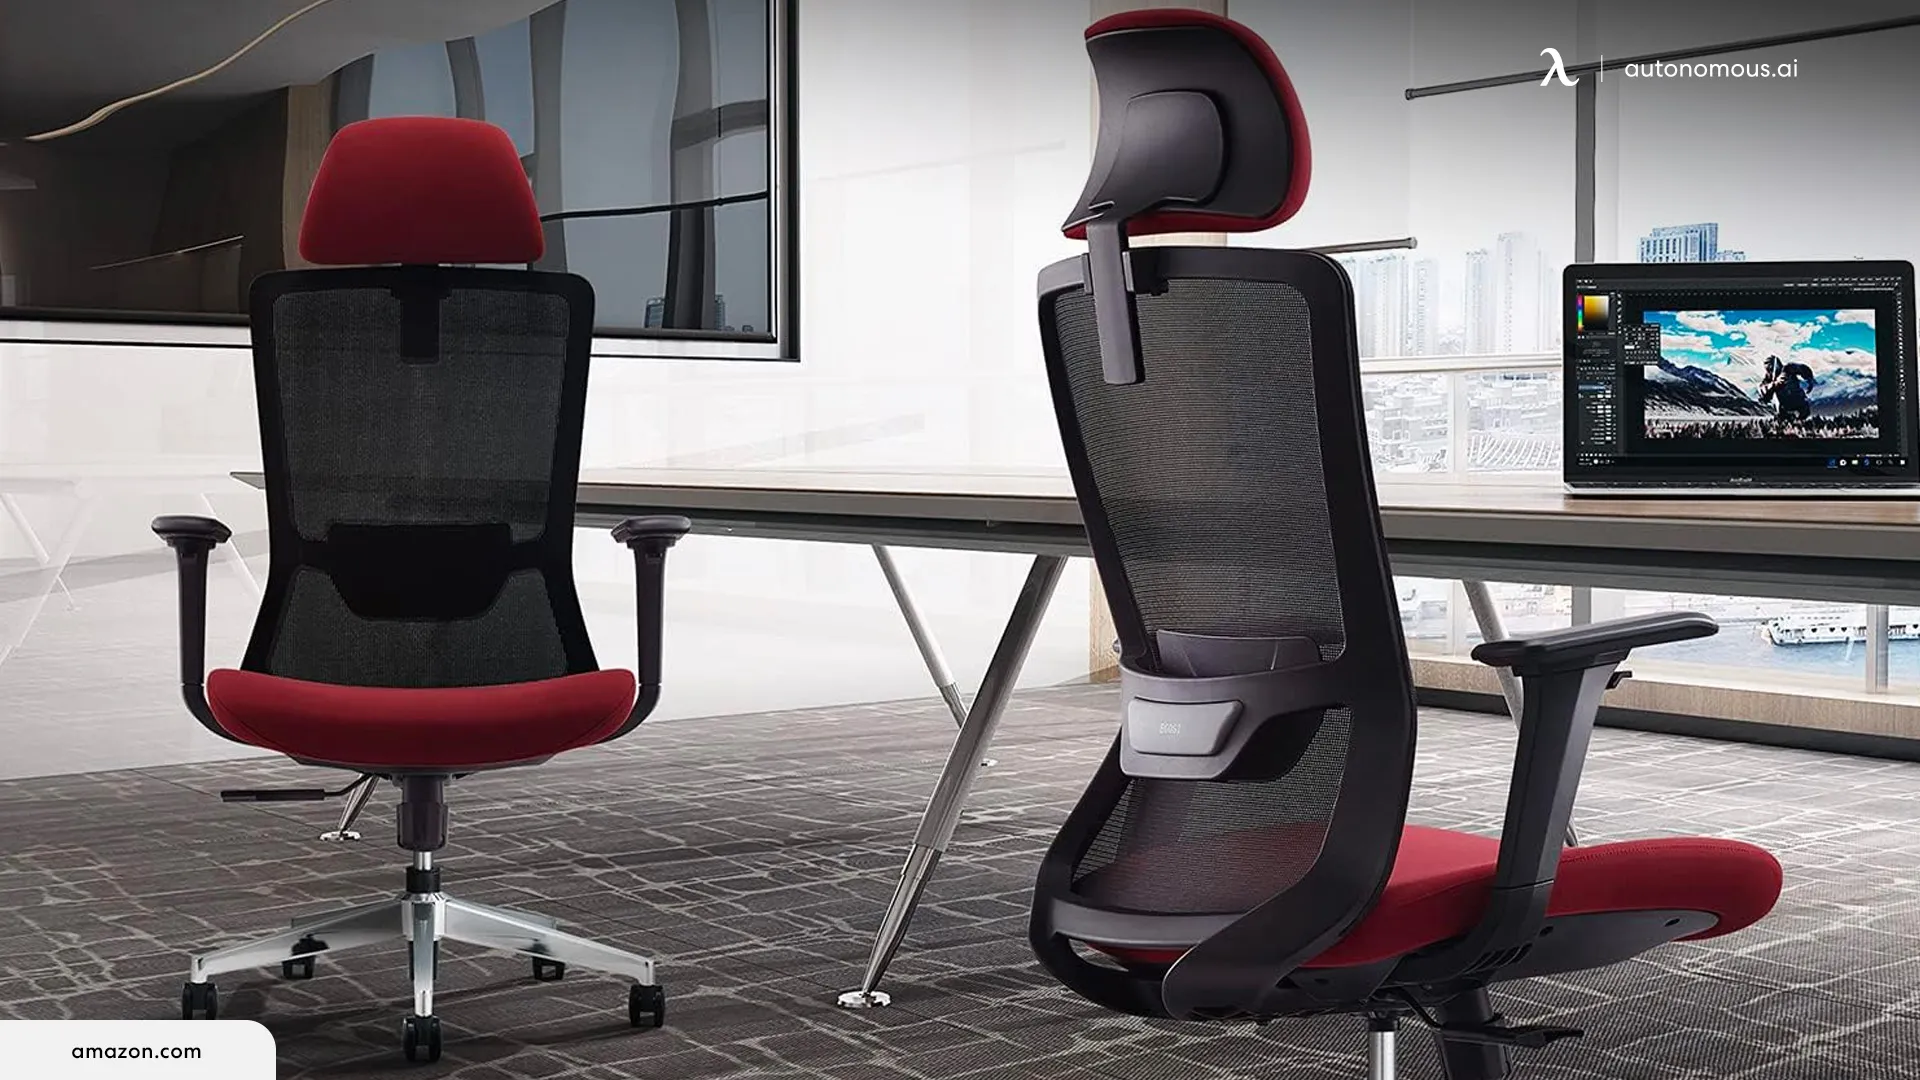 The 5 Best 4D Armrest Office Chair Reviews